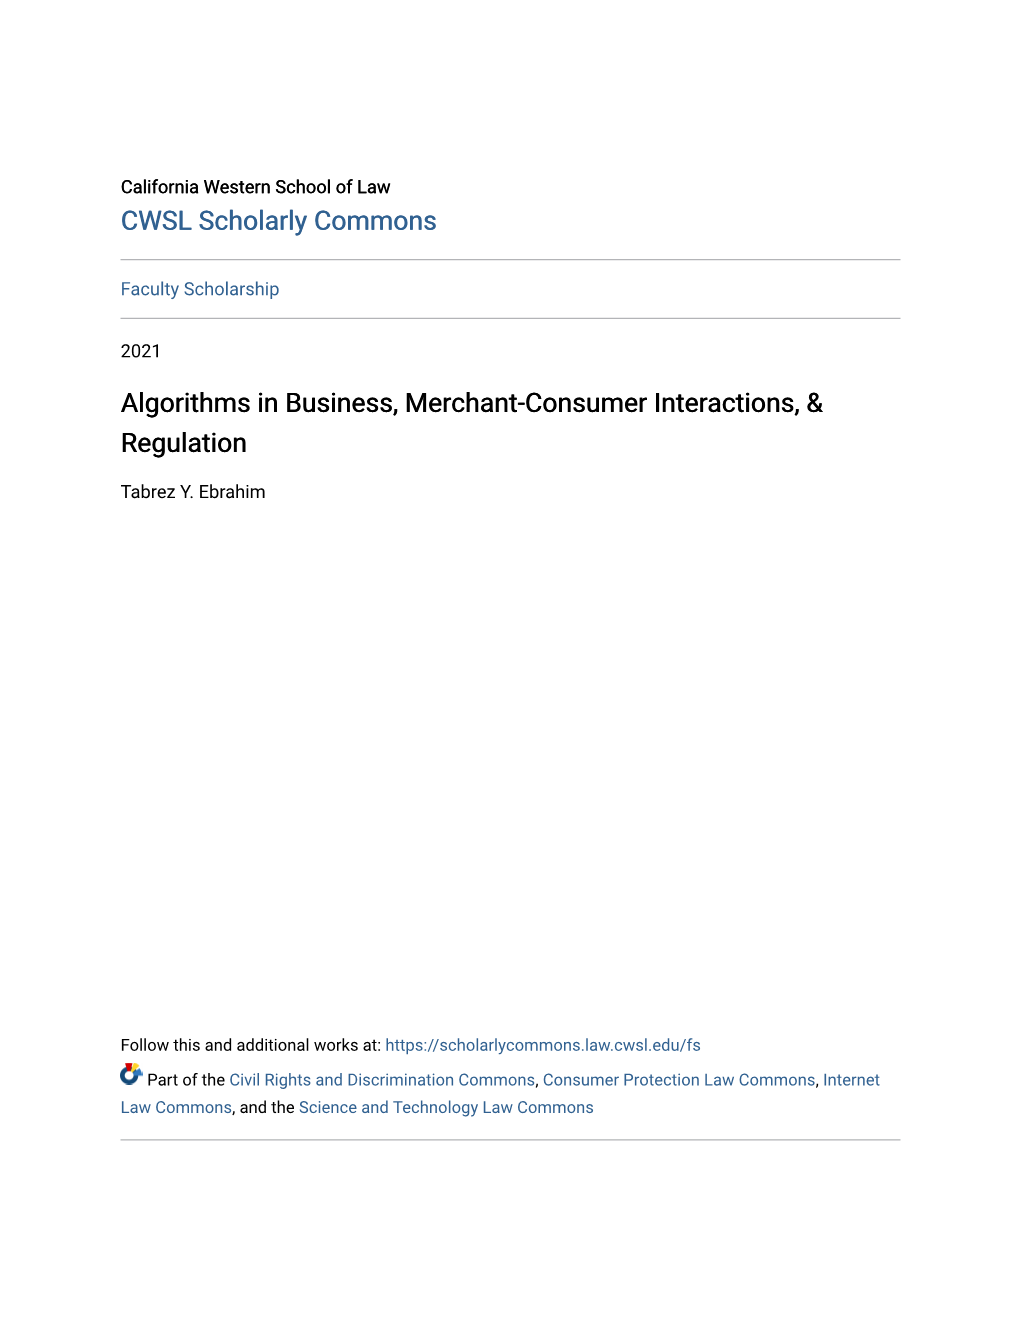 Algorithms in Business, Merchant-Consumer Interactions, & Regulation